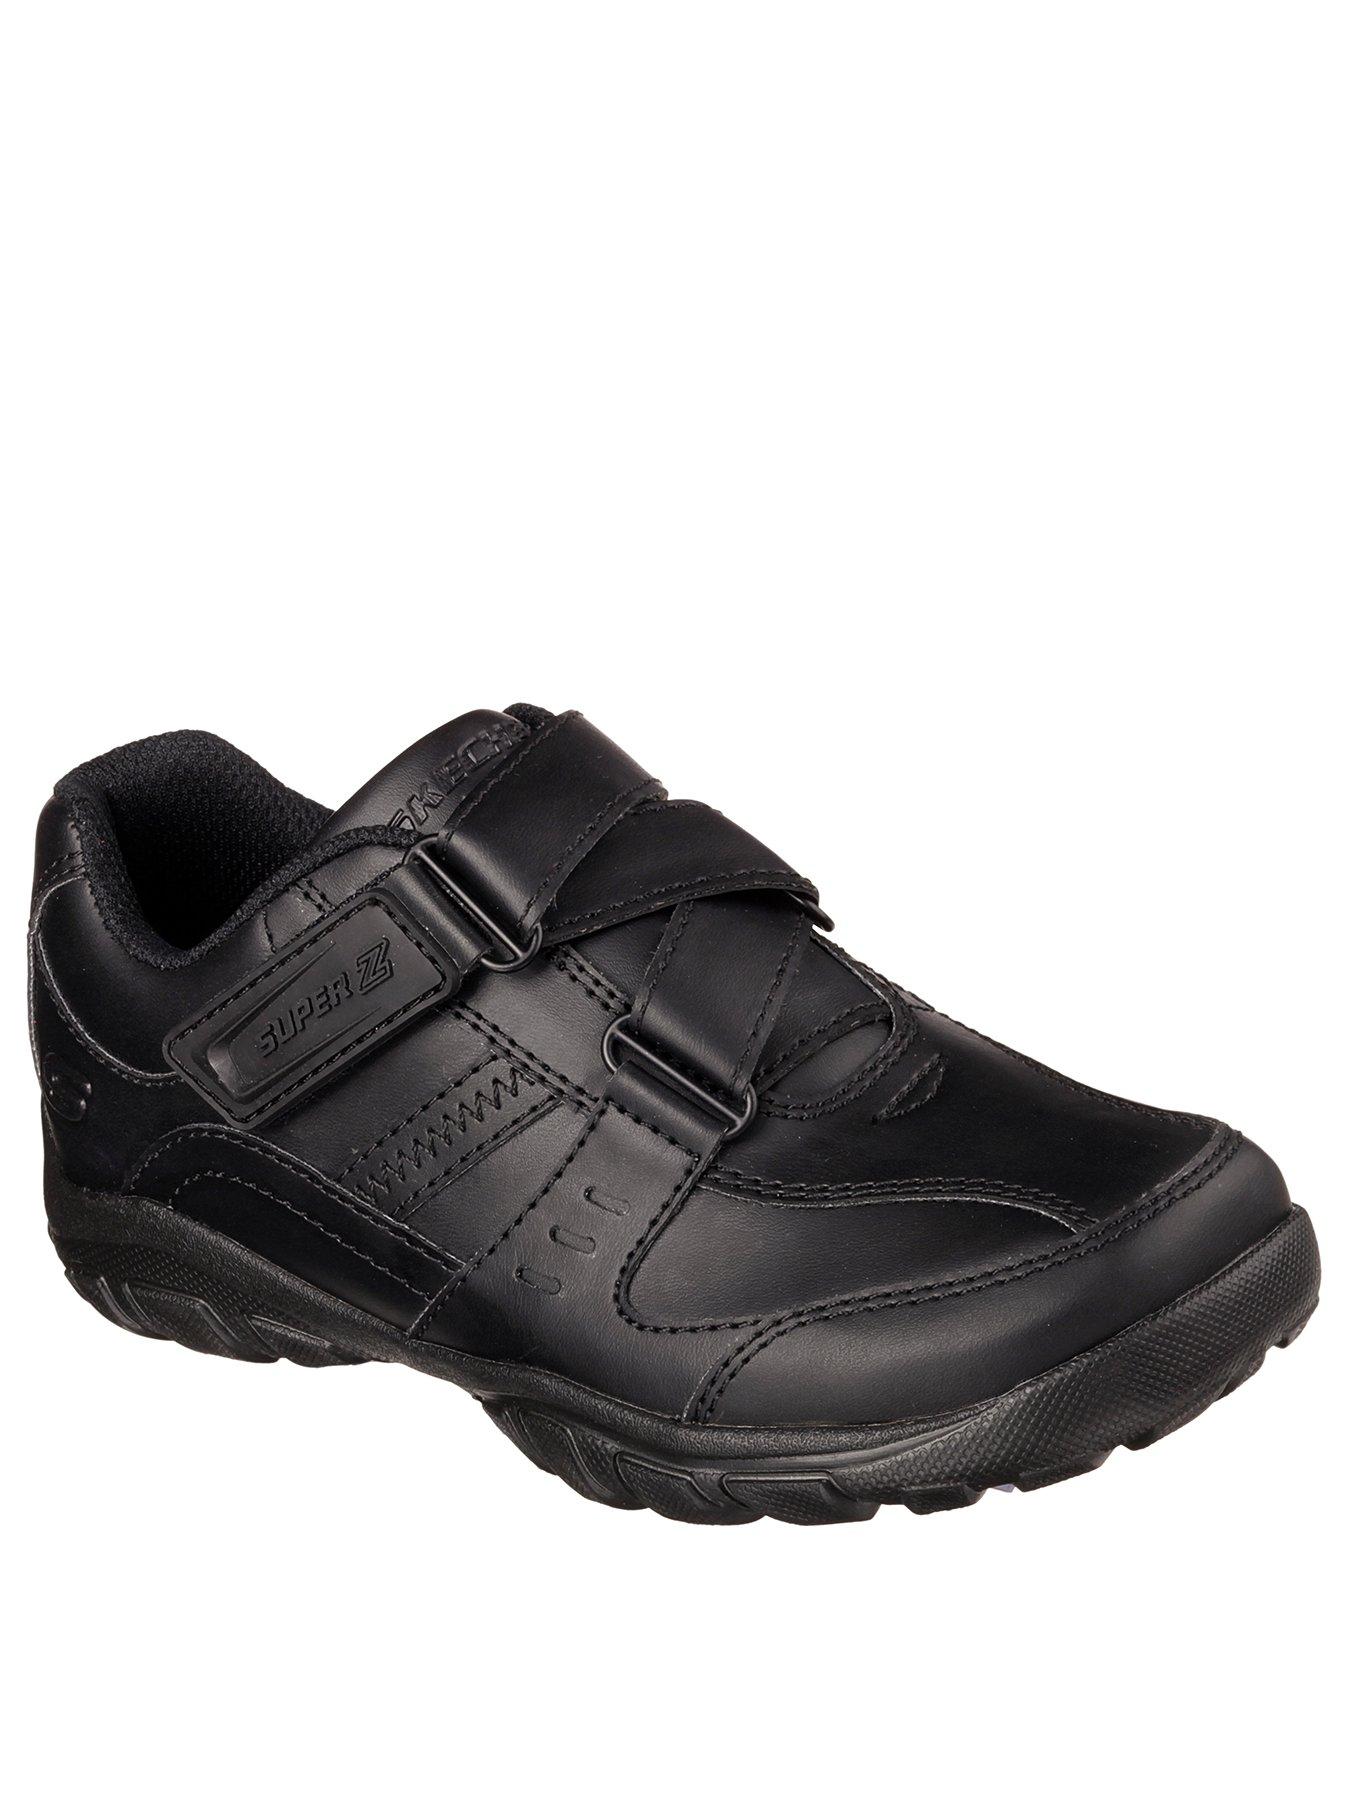 skechers black school shoes